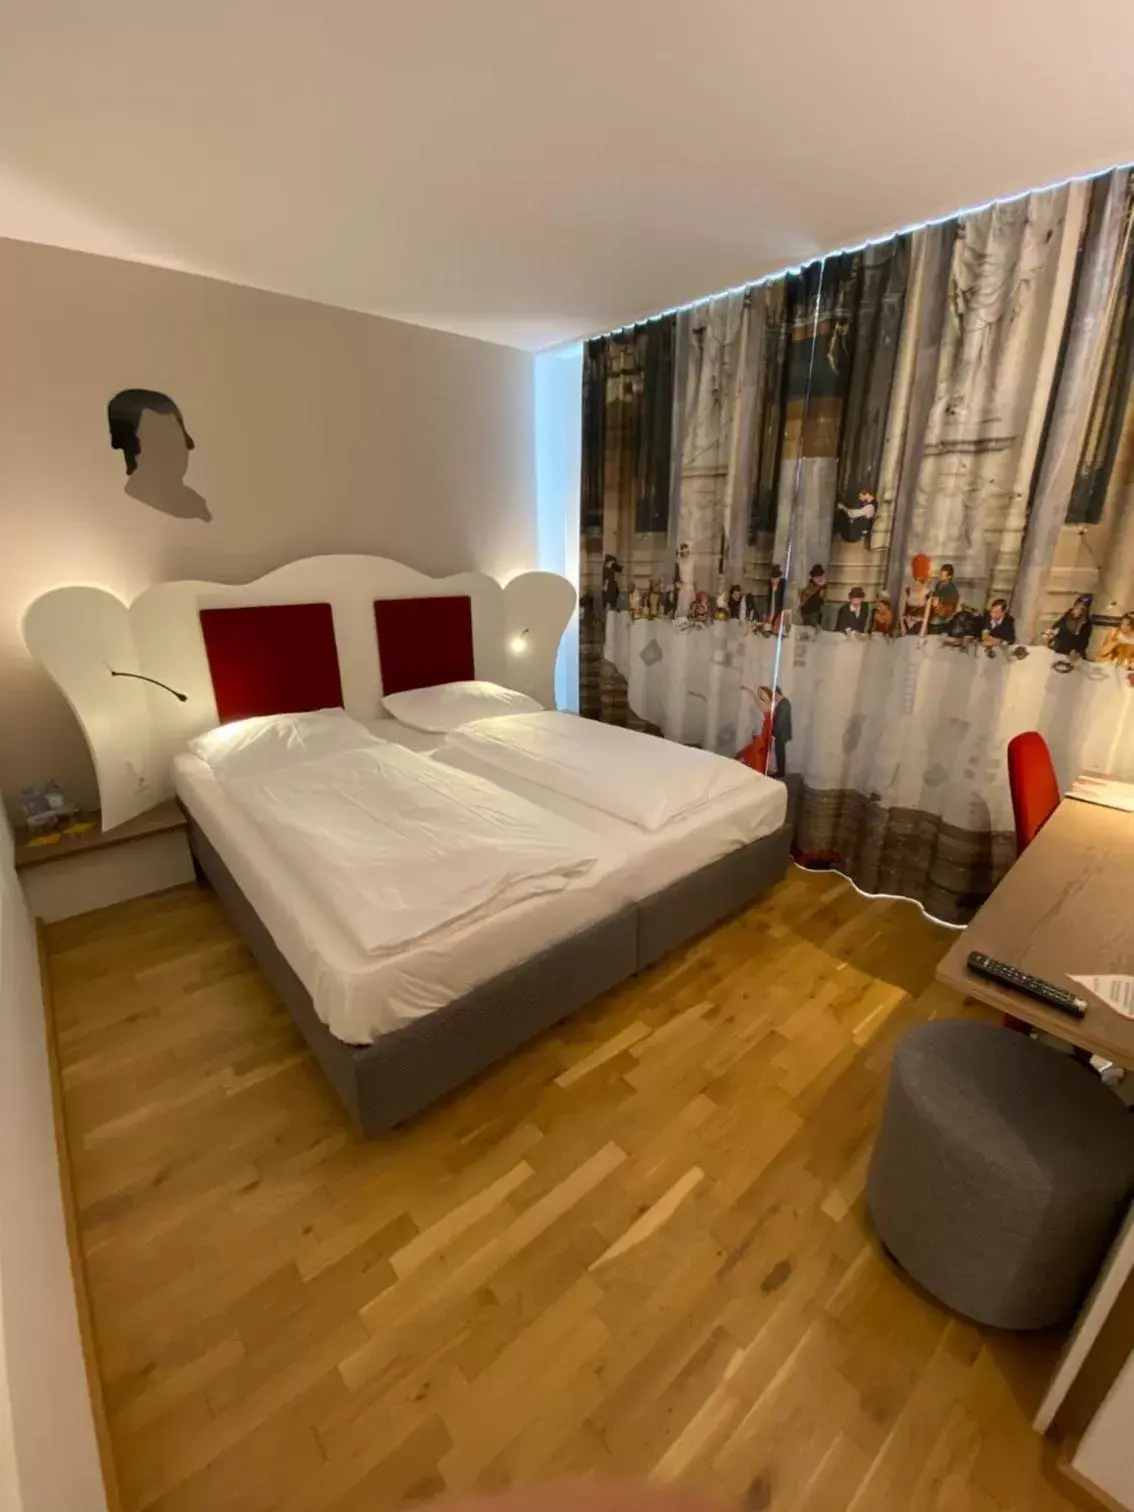 Bed, Room Photo in JUFA Hotel Salzburg City